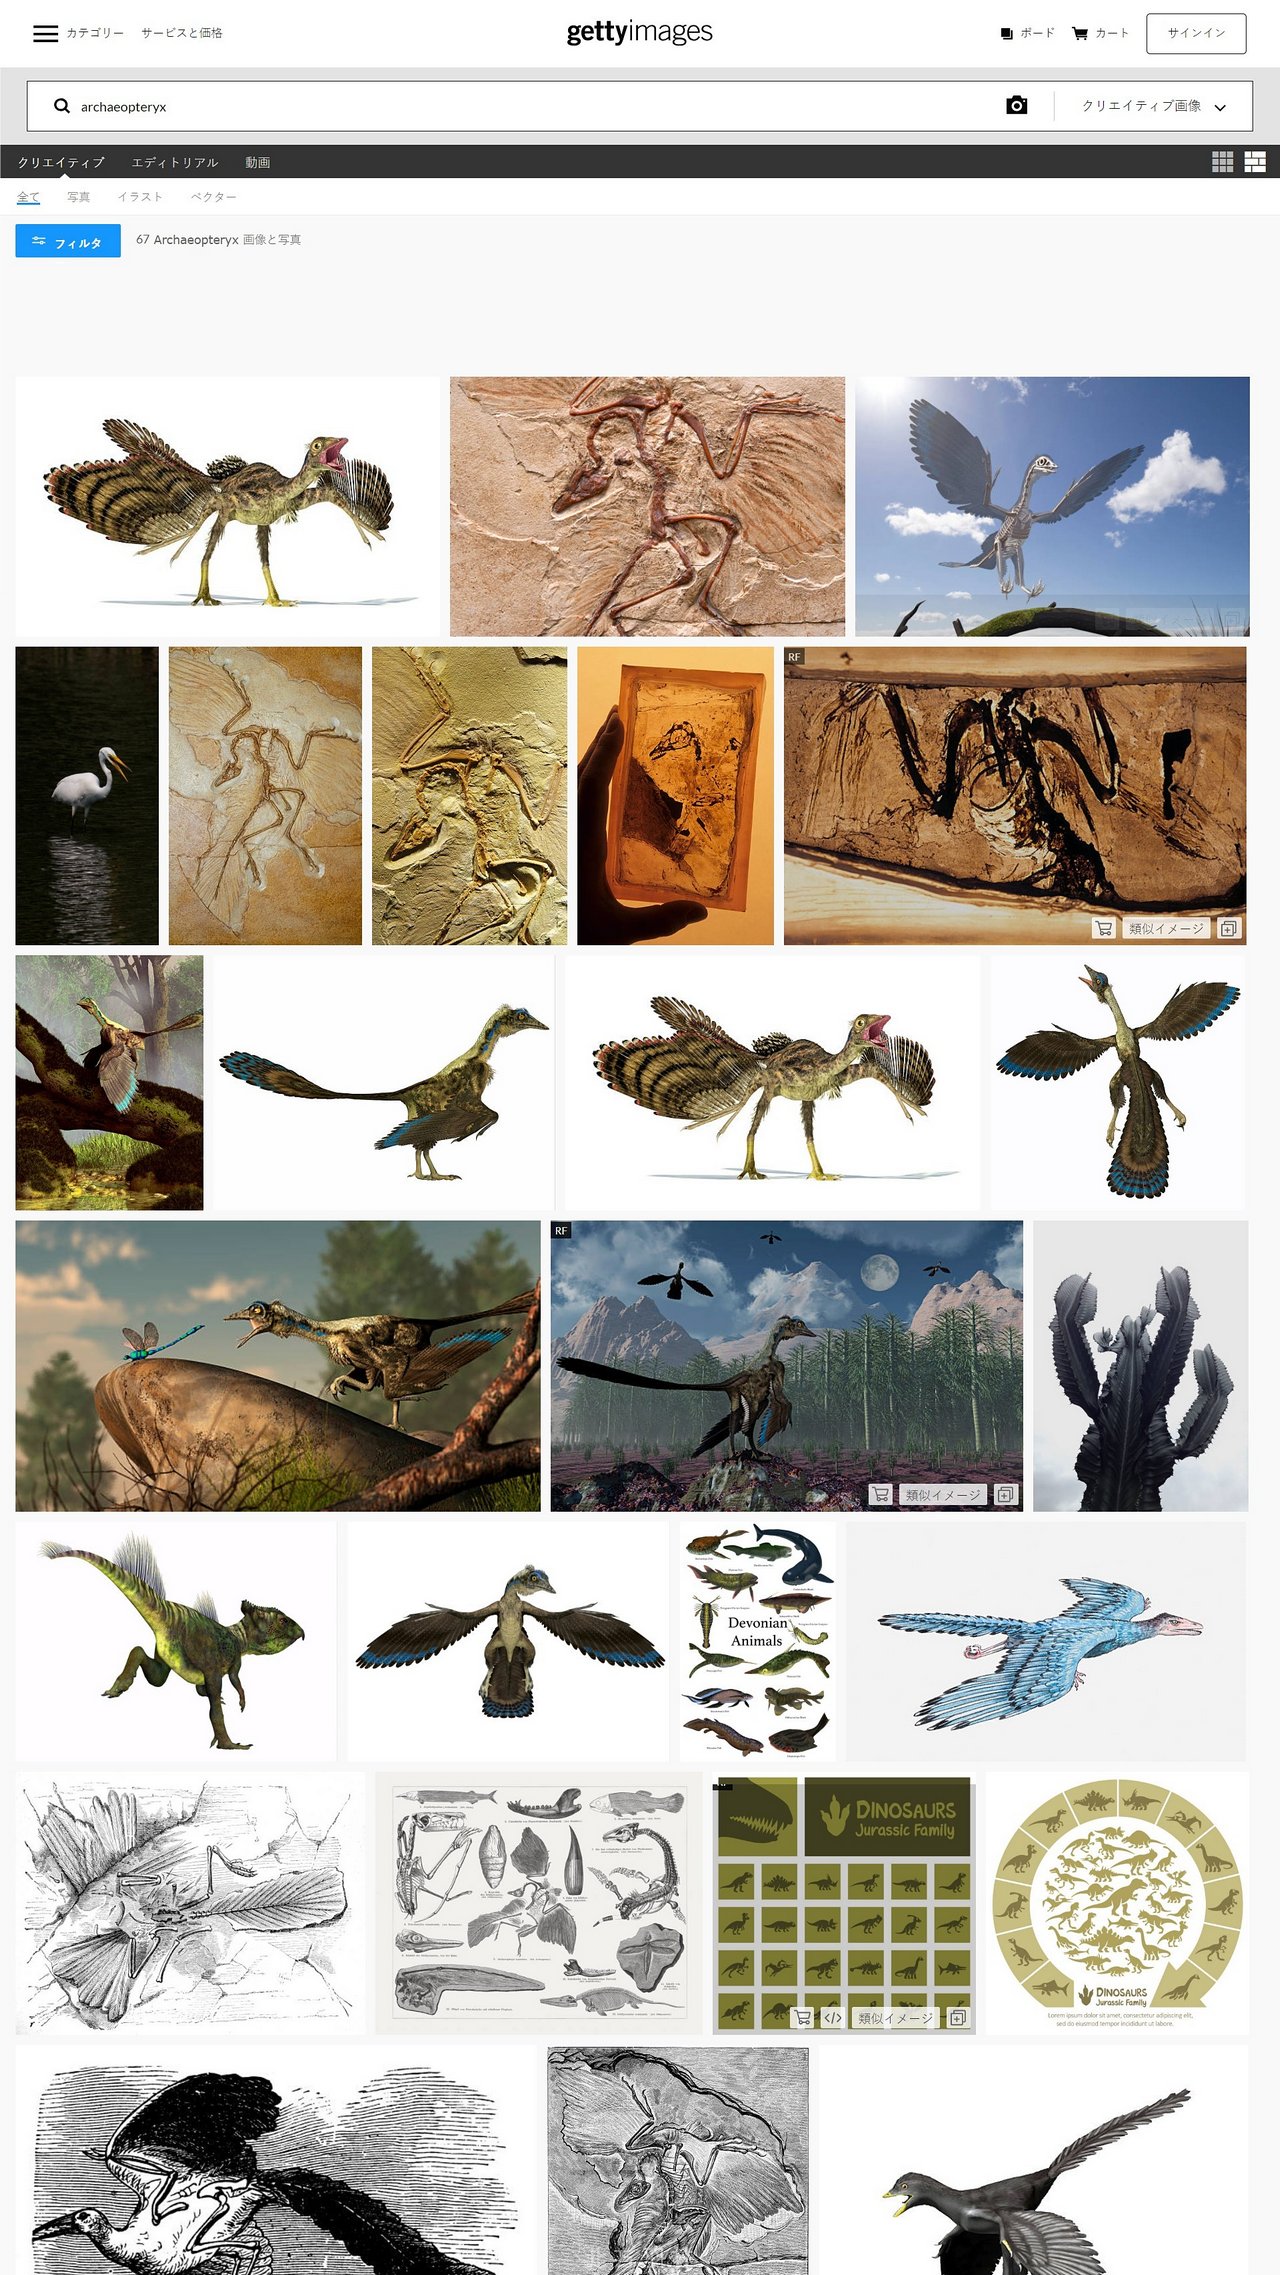 Getty Images 中可以找到的古生物圖片非常多，這也是為什麼 Zeta 要推薦這個線上圖庫的原因